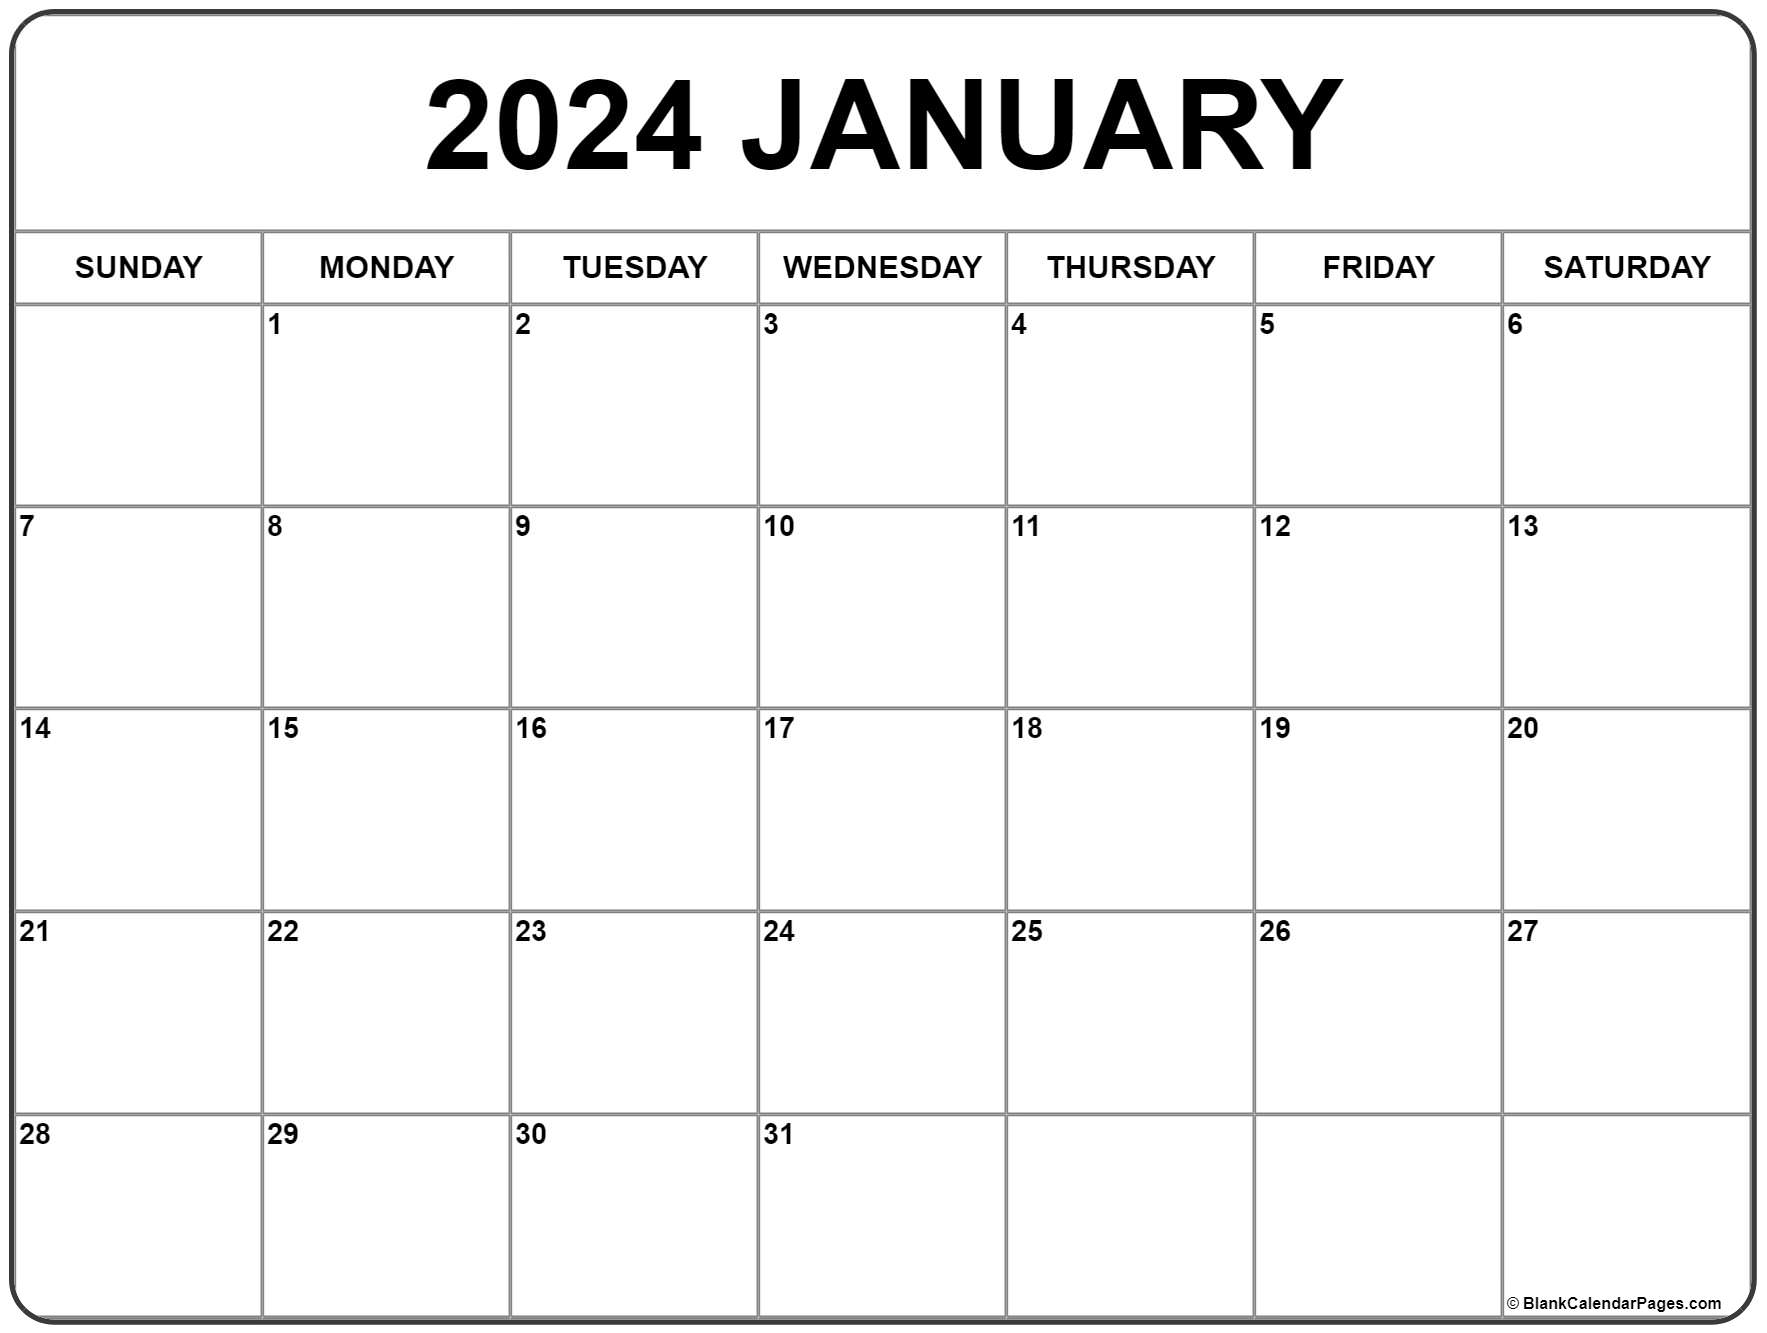 Printable Calendar 2021 January January 2021 calendar | free printable monthly calendars